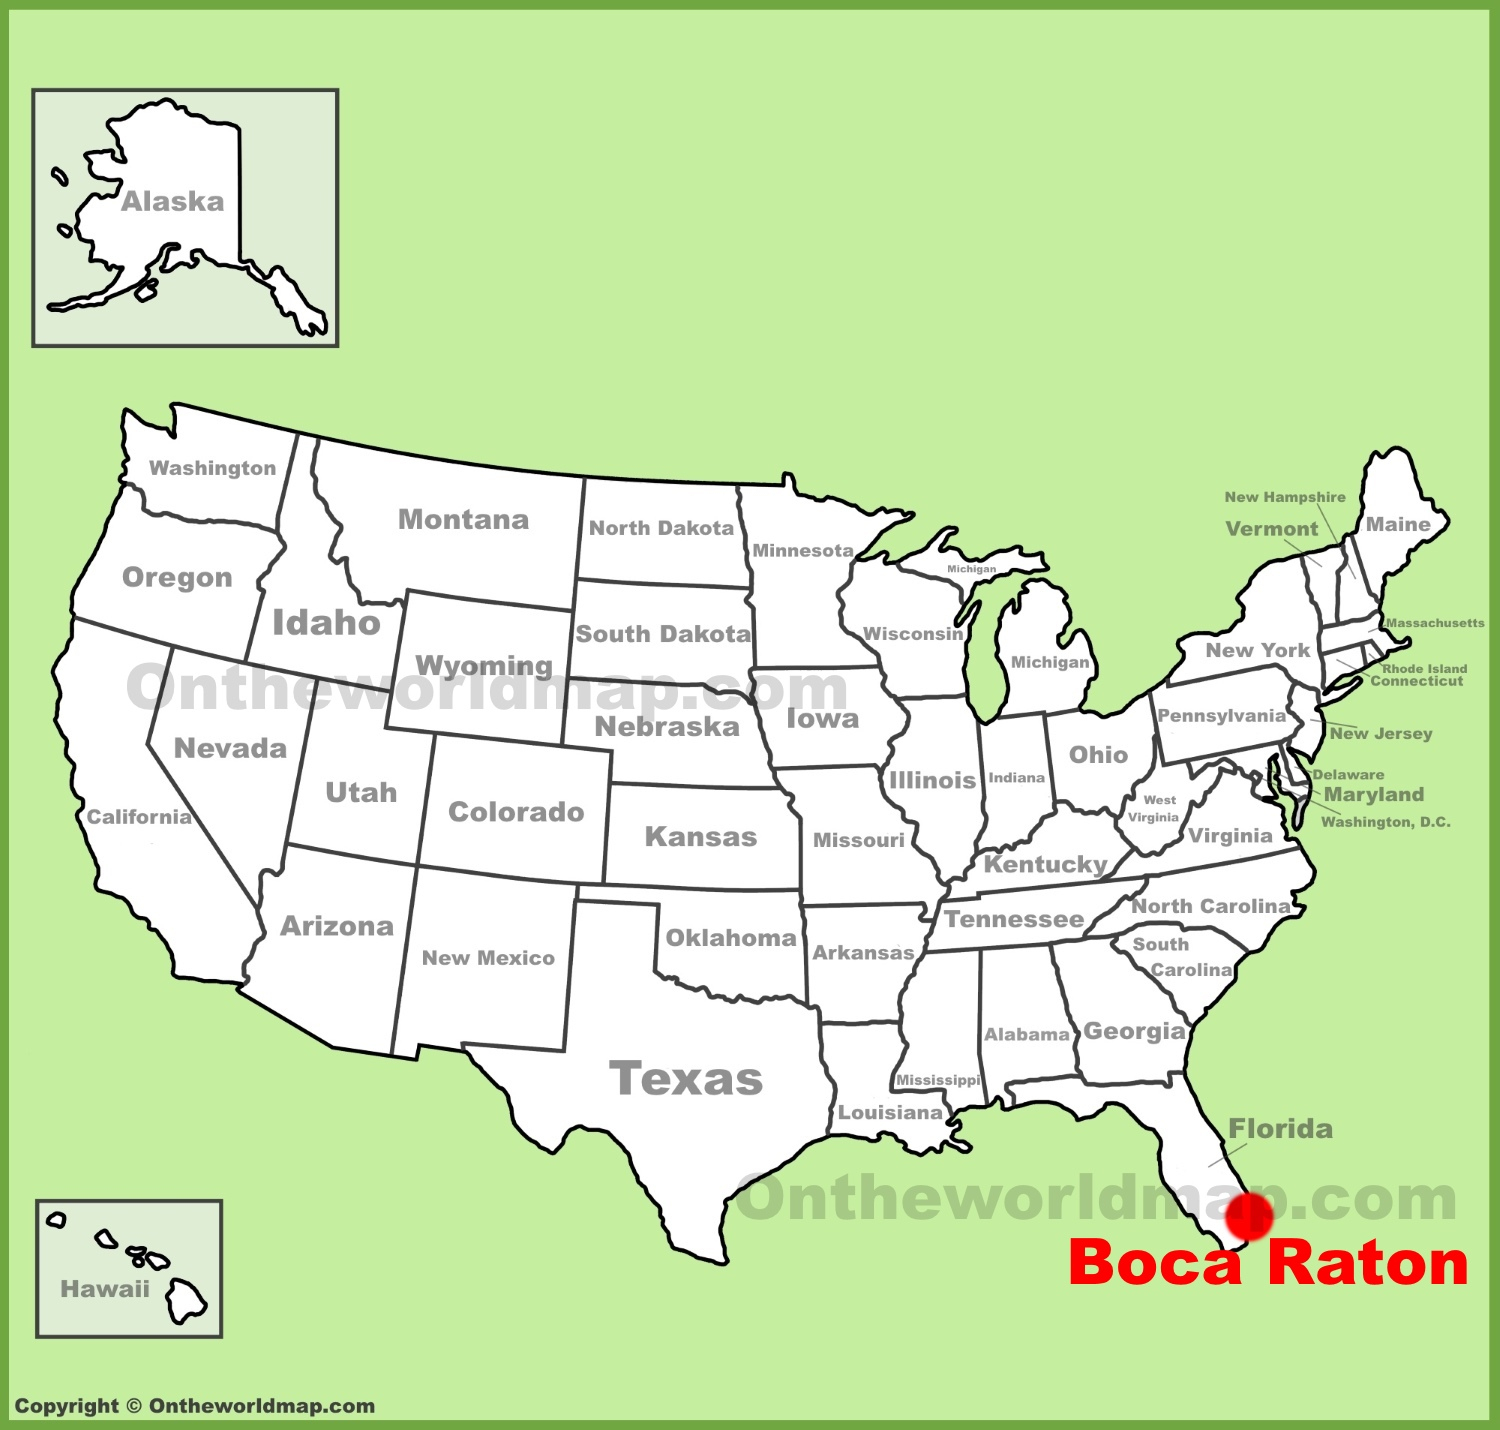 Boca Raton On Map And Travel Information | Download Free Boca Raton - Map Of Florida Including Boca Raton